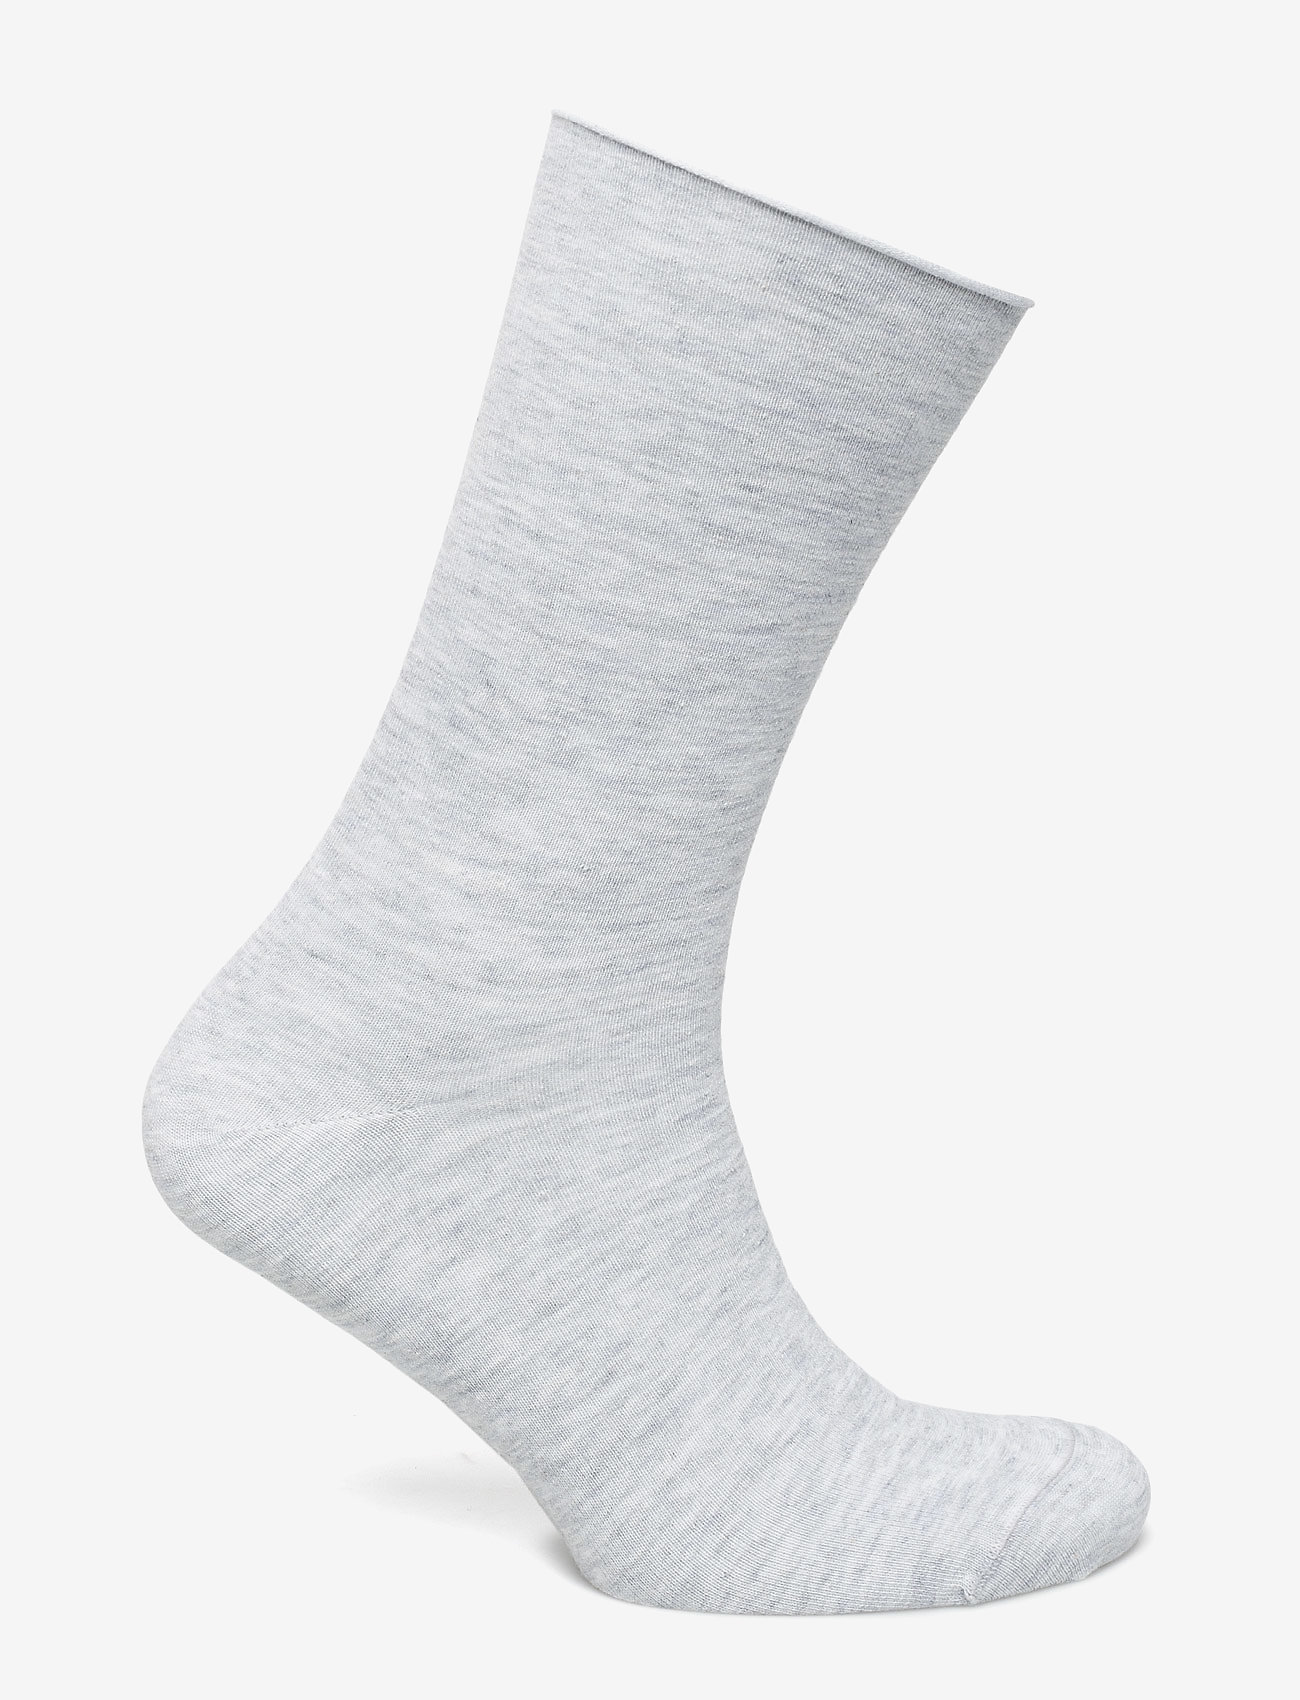 Decoy - Ladies thin ankle sock - light grey melange - 1